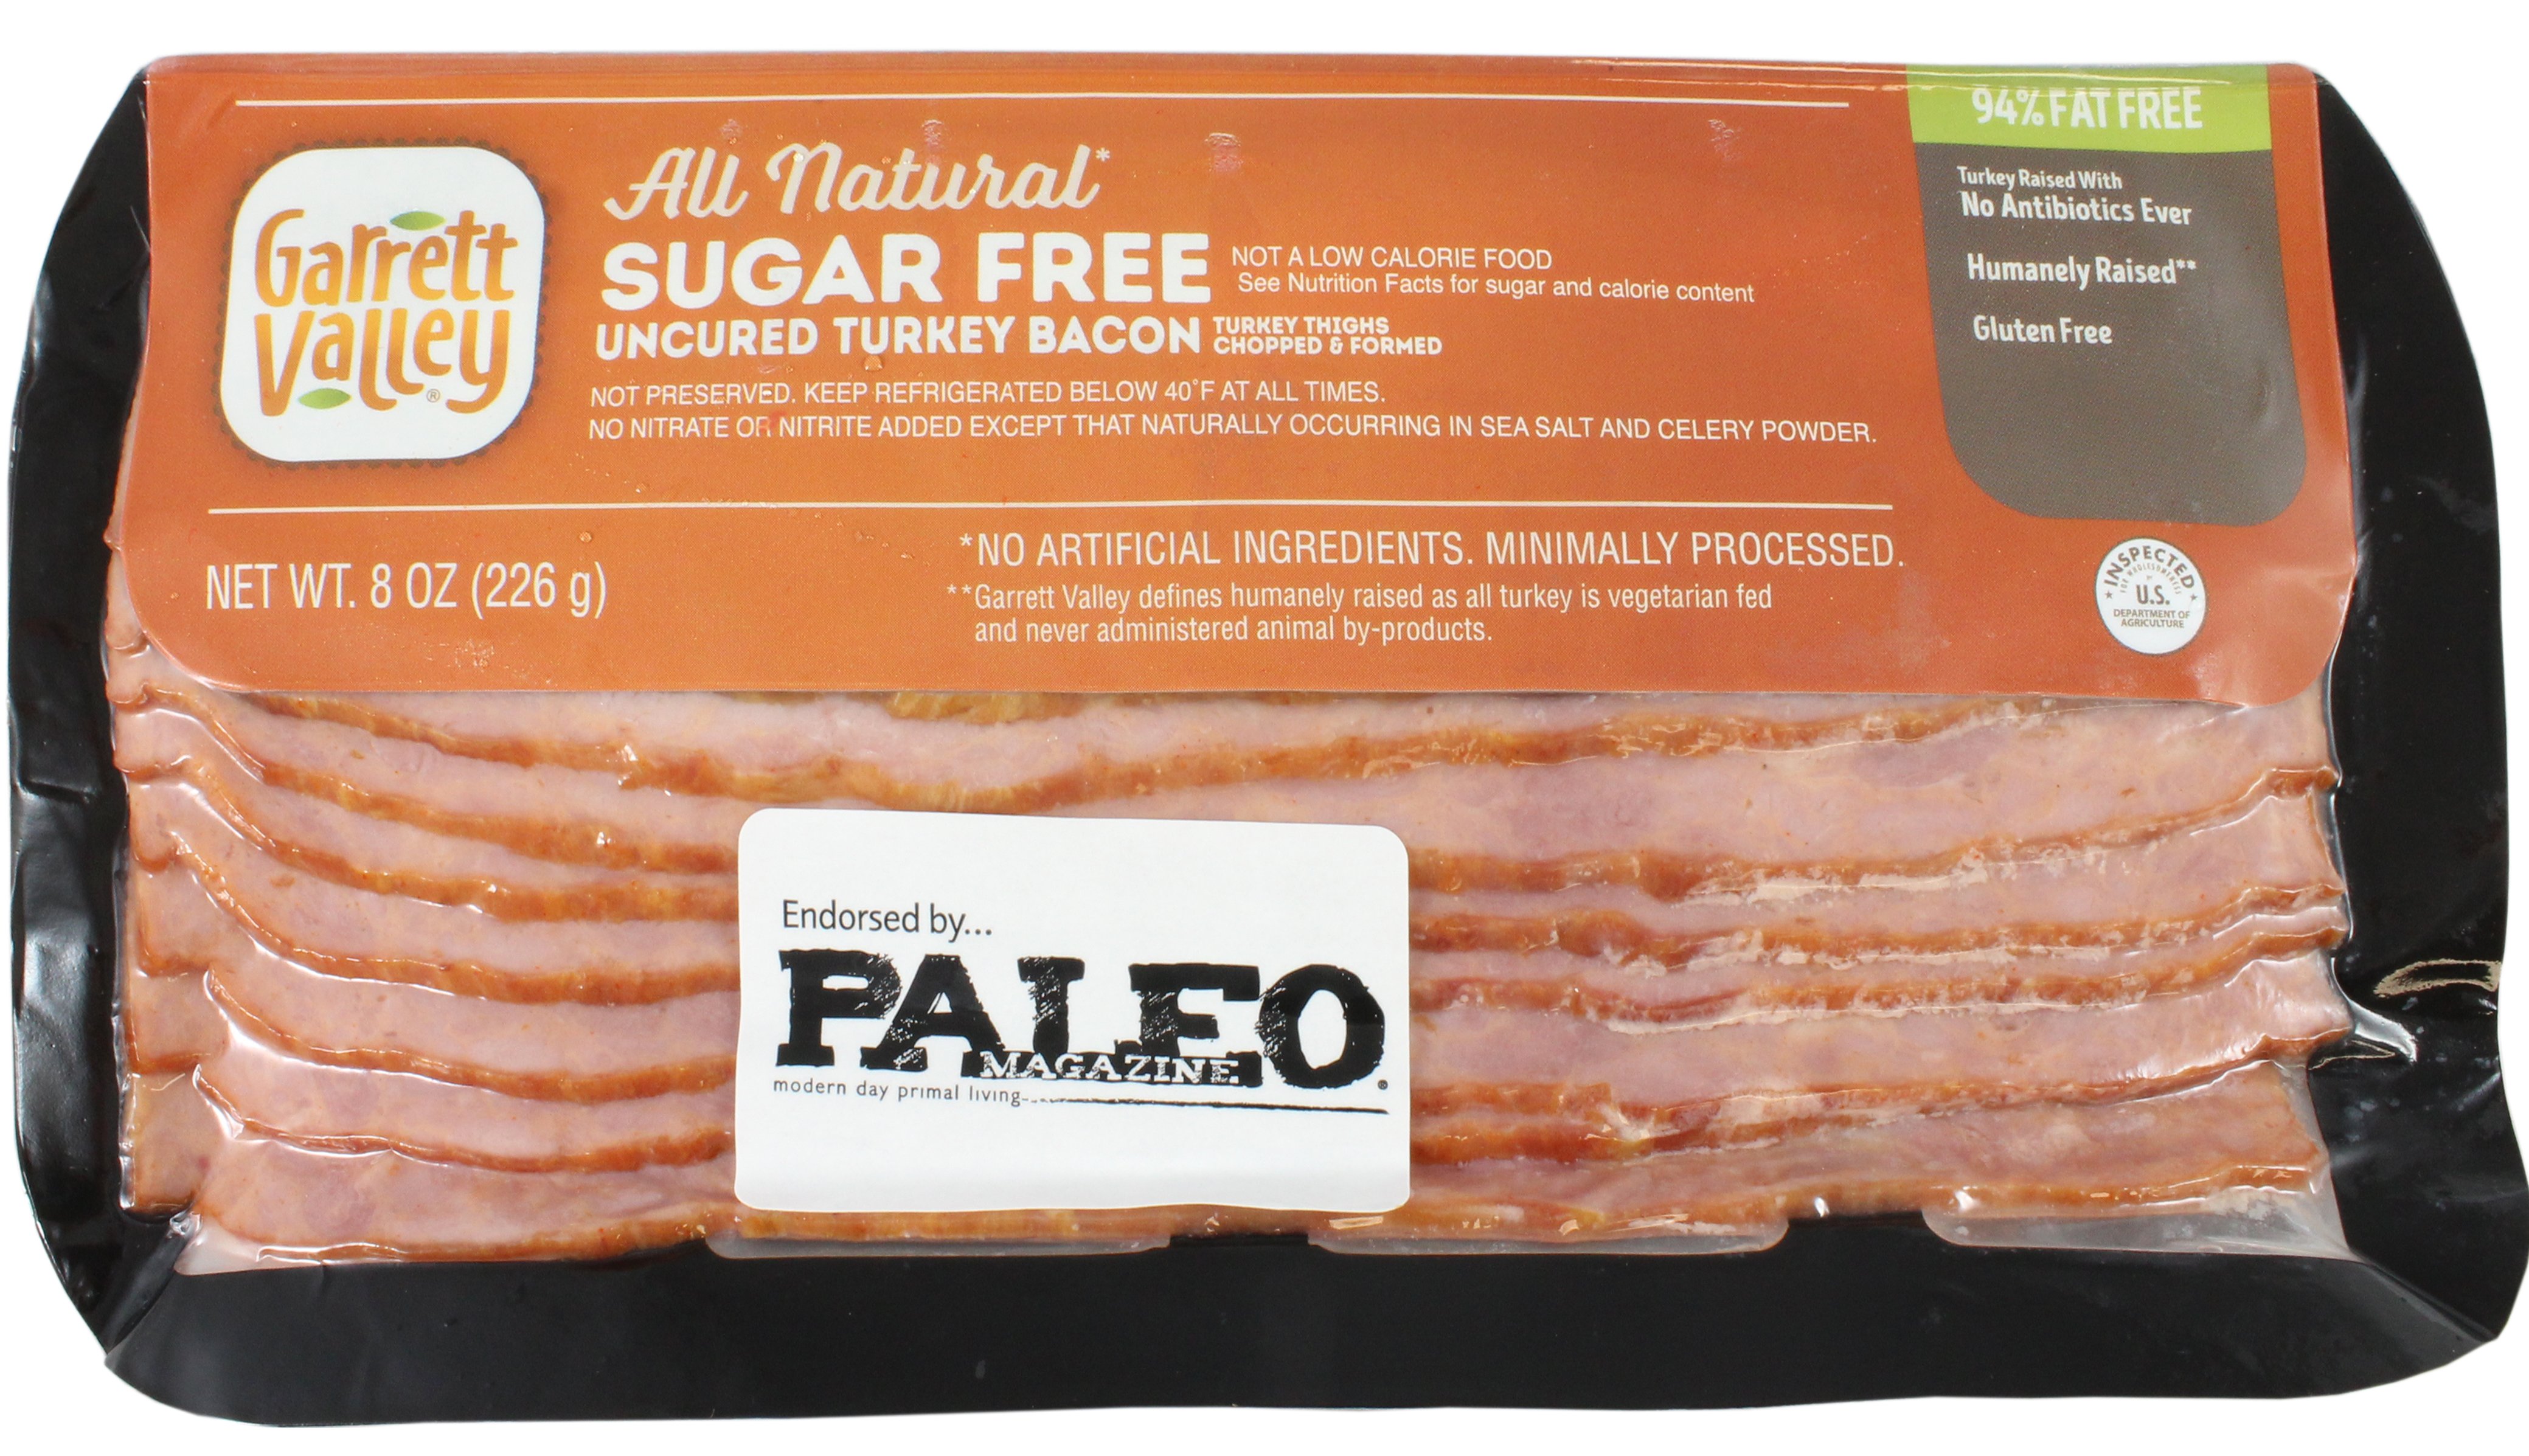 Garrett Valley All Natural Sugar Free Uncured Turkey Bacon - Shop Bacon at  H-E-B